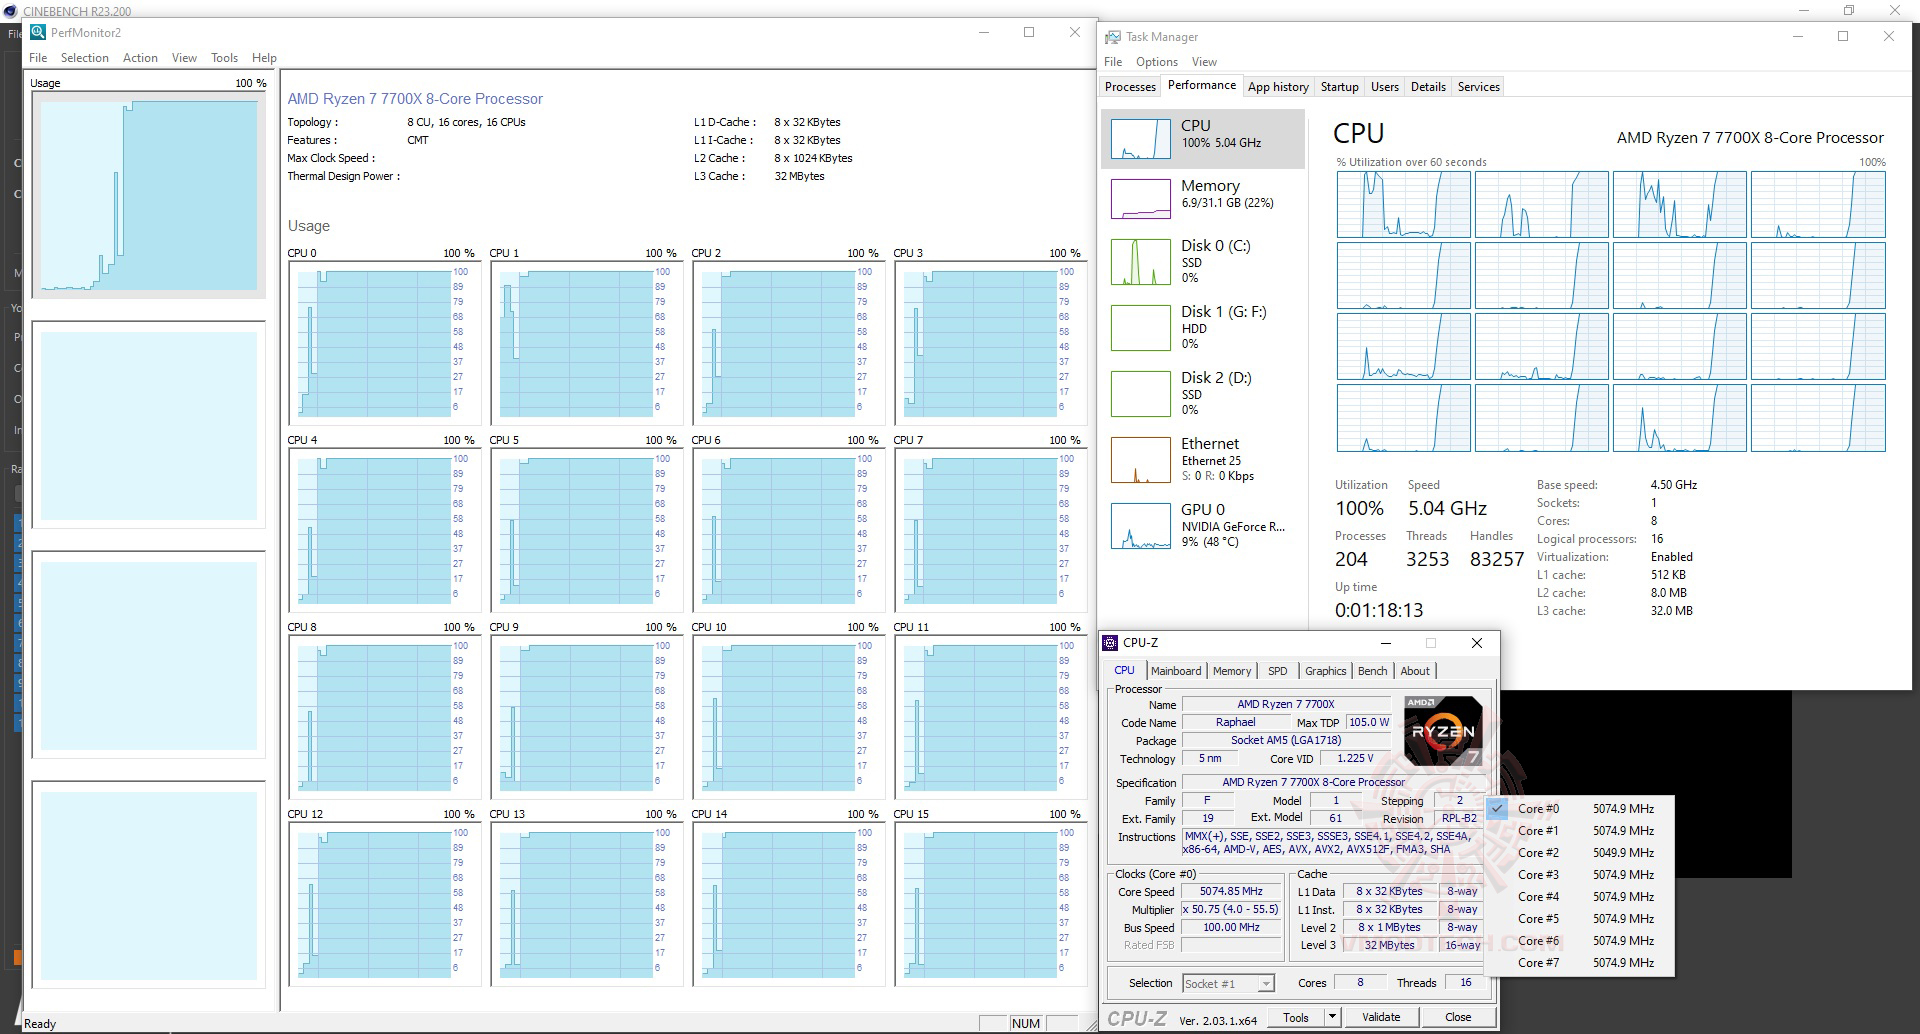 core AMD RYZEN 7 7700X PROCESSOR REVIEW